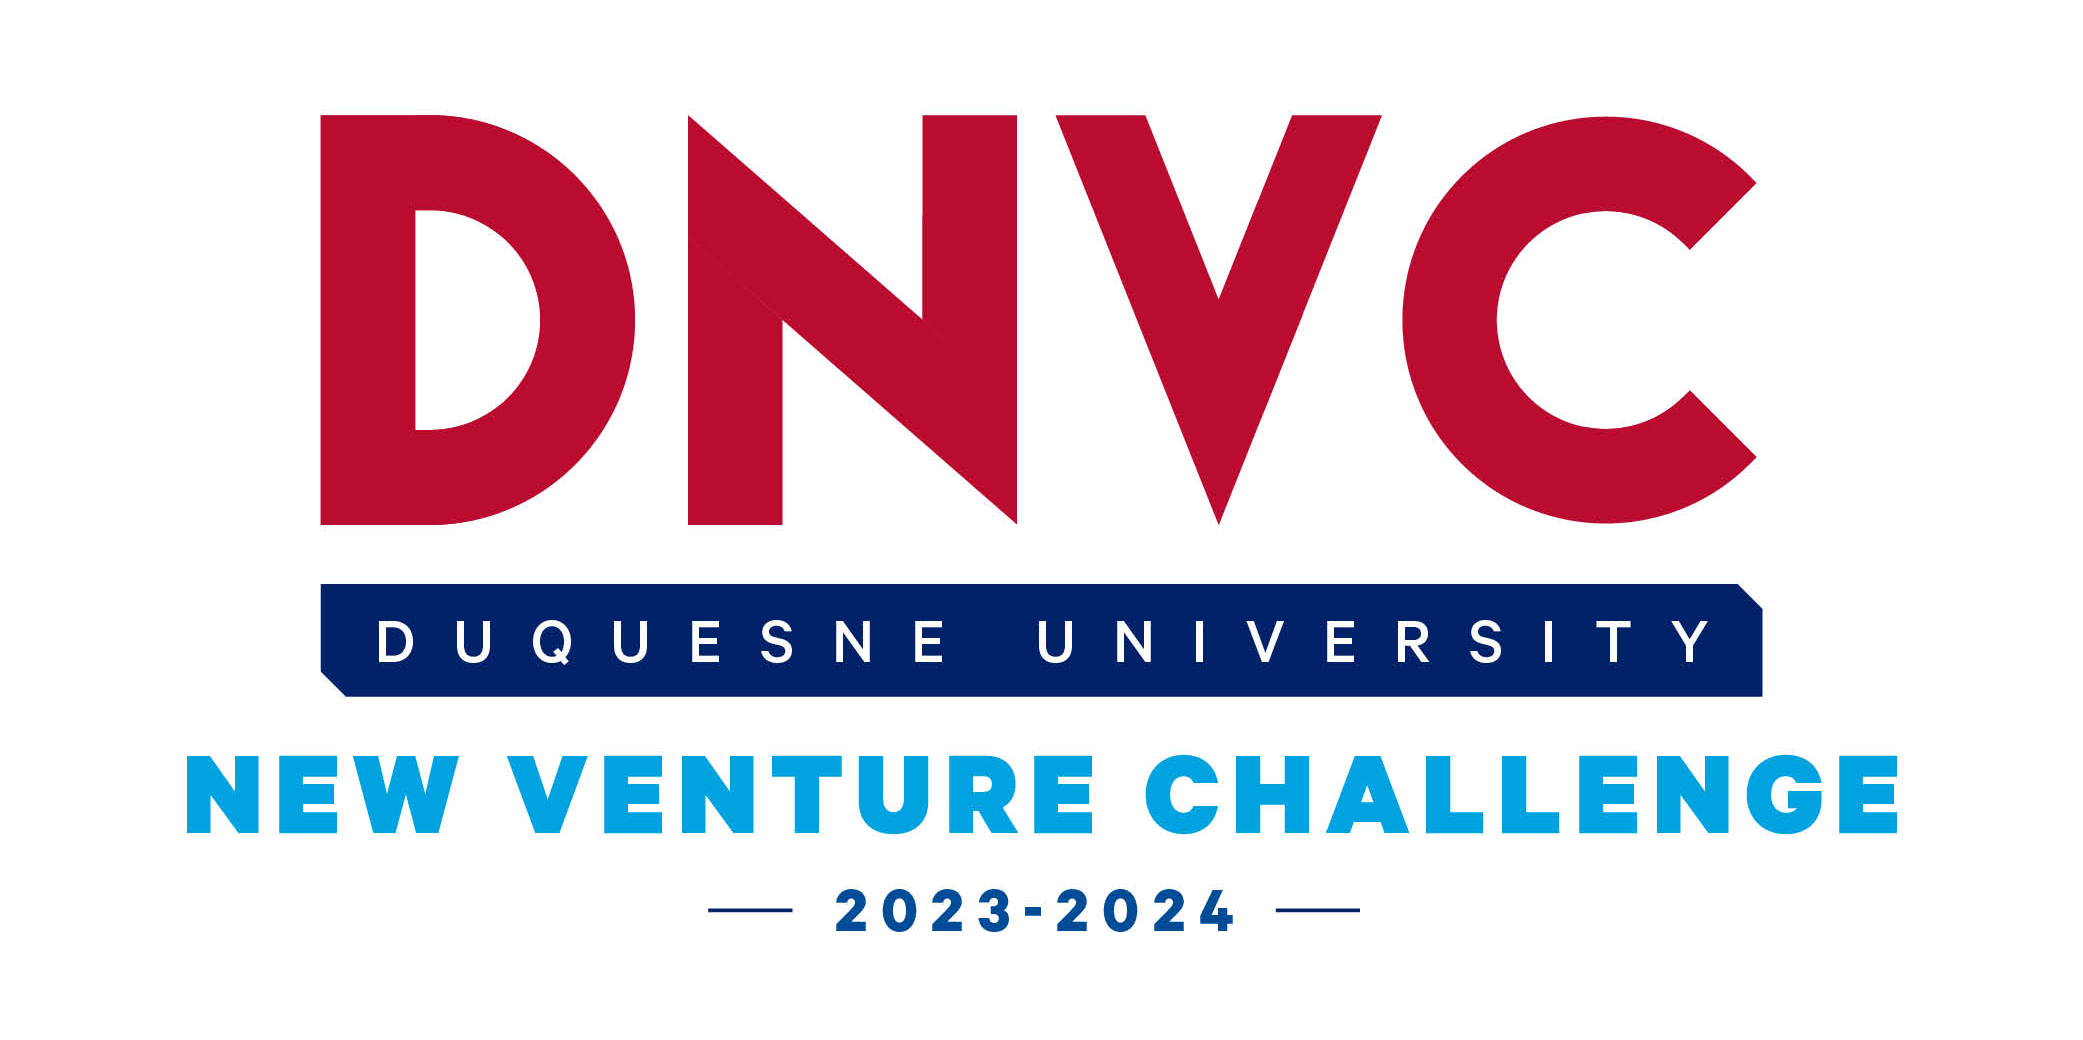 Duquesne University New Venture Challenge 2023-2024